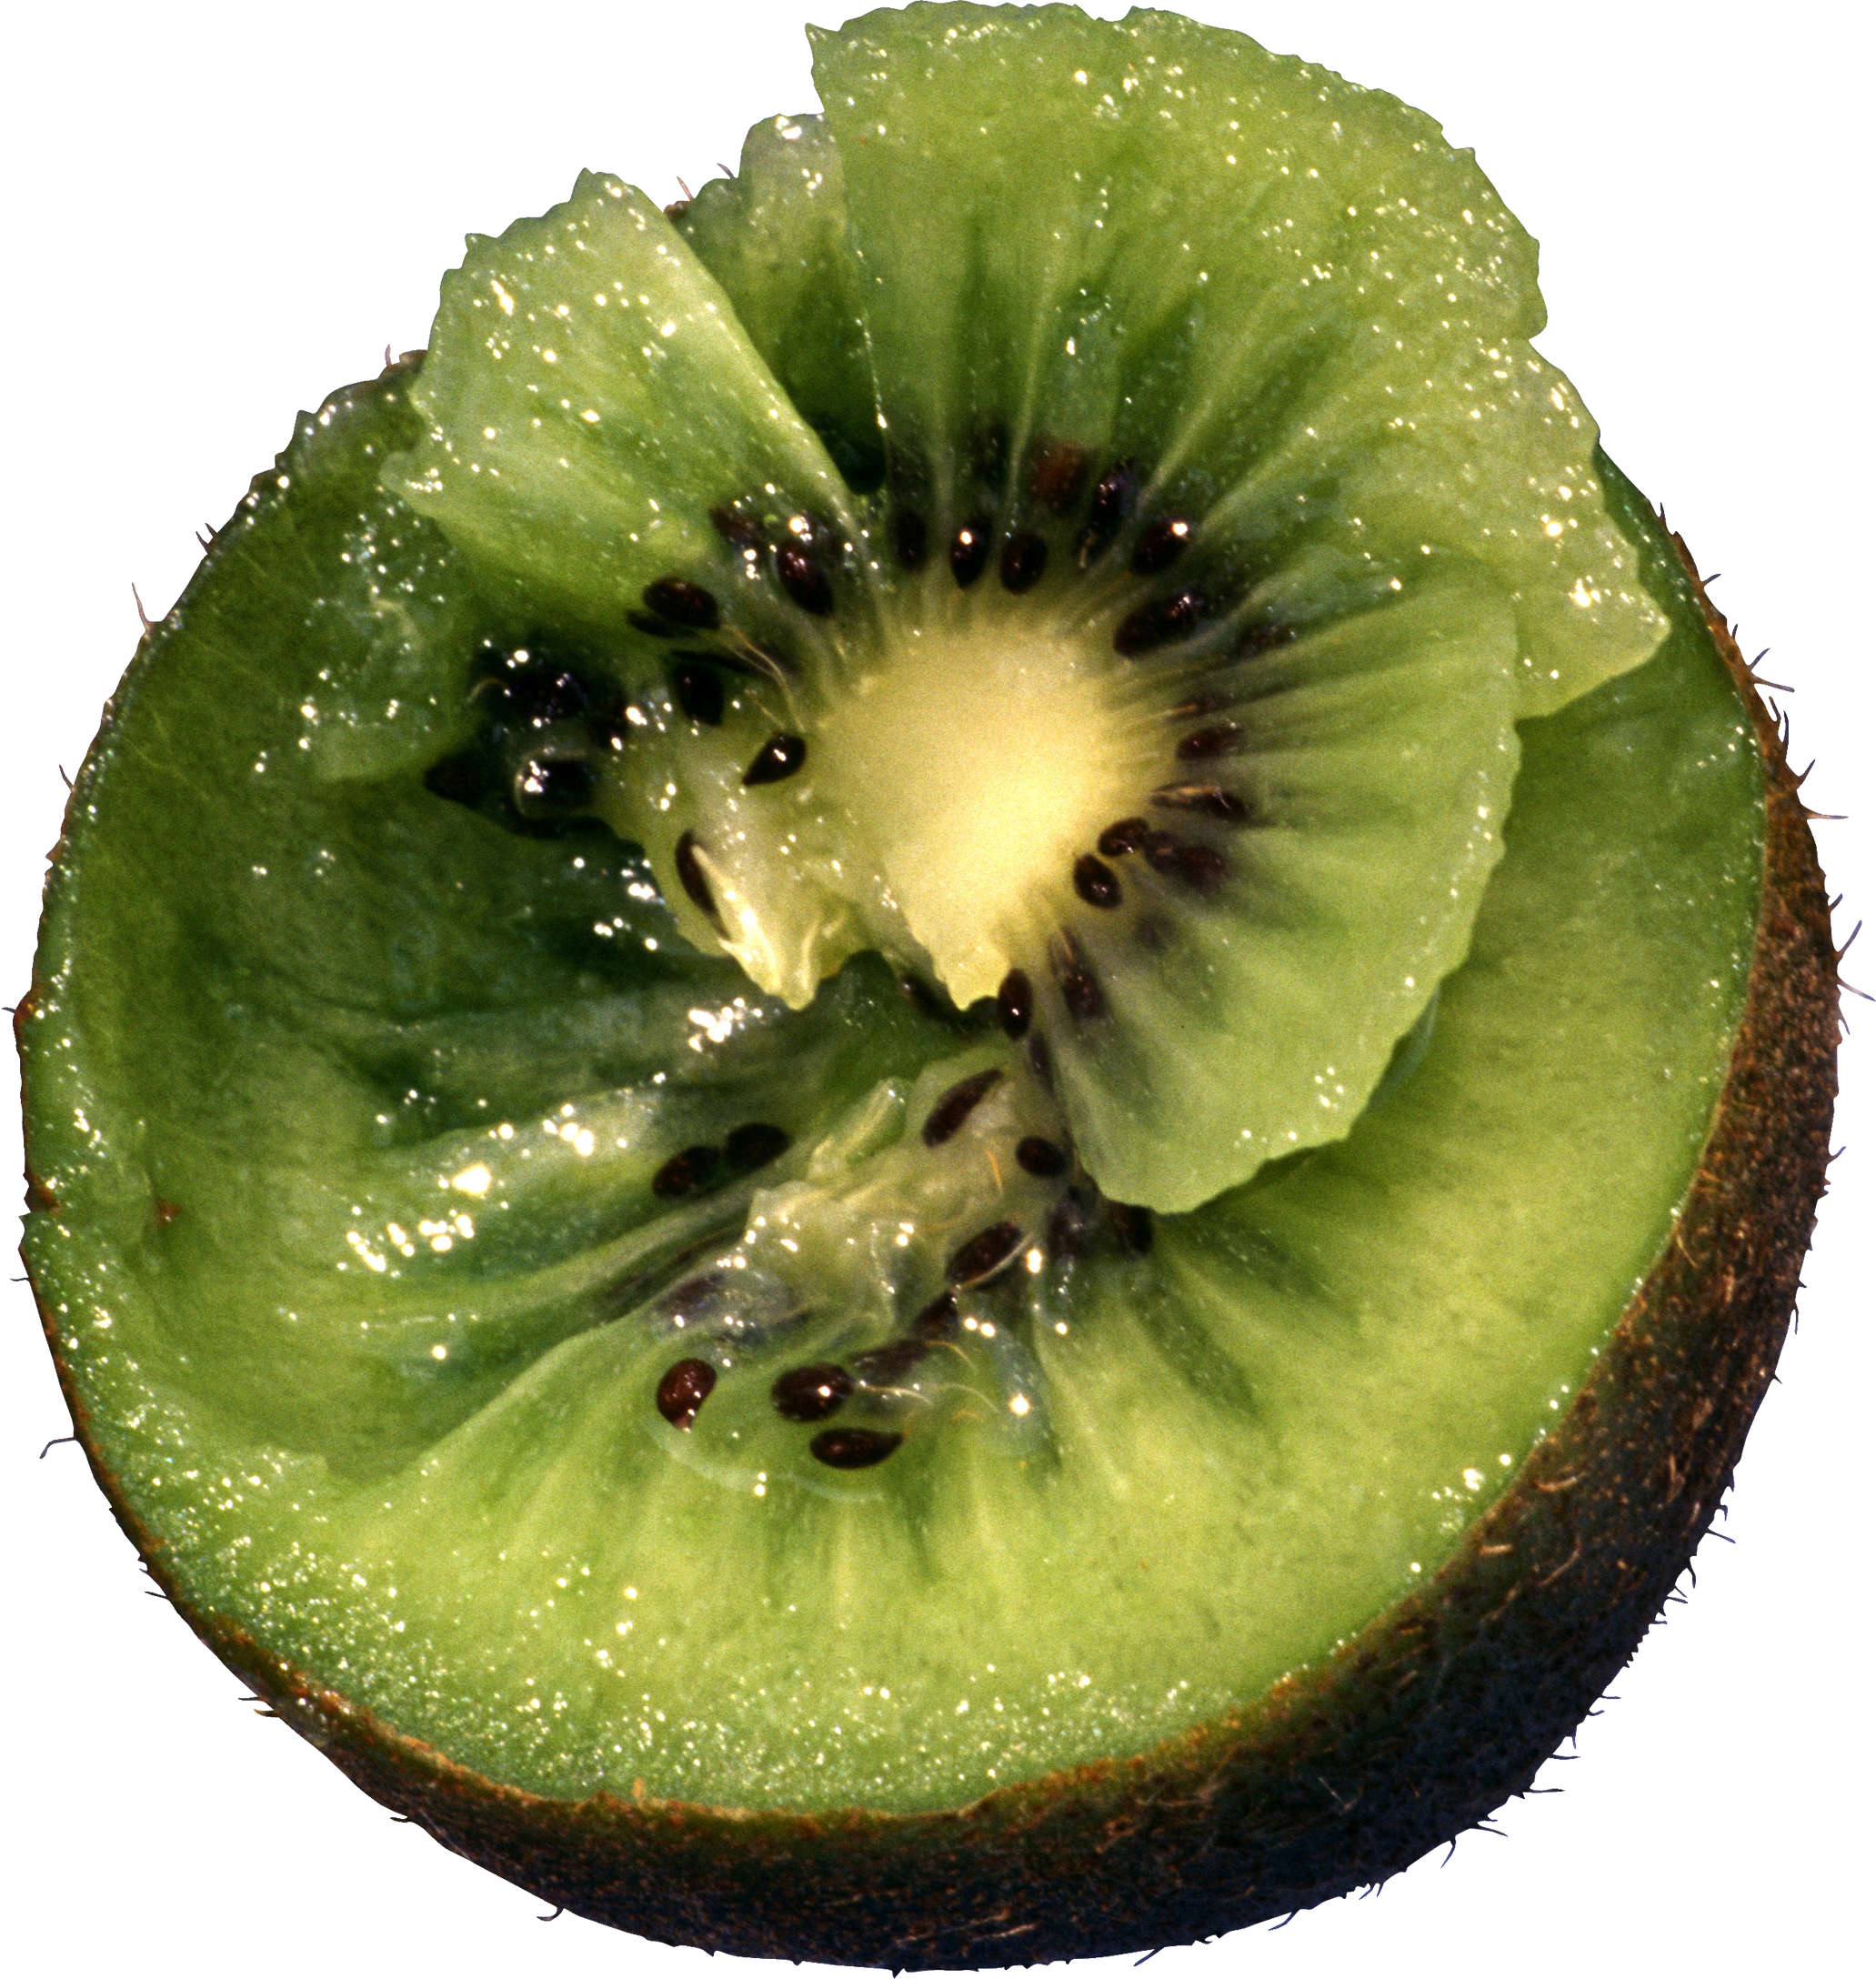 Kiwi Png Image, Free Fruit Kiwi Png Pictures Download - Kiwi, Transparent background PNG HD thumbnail